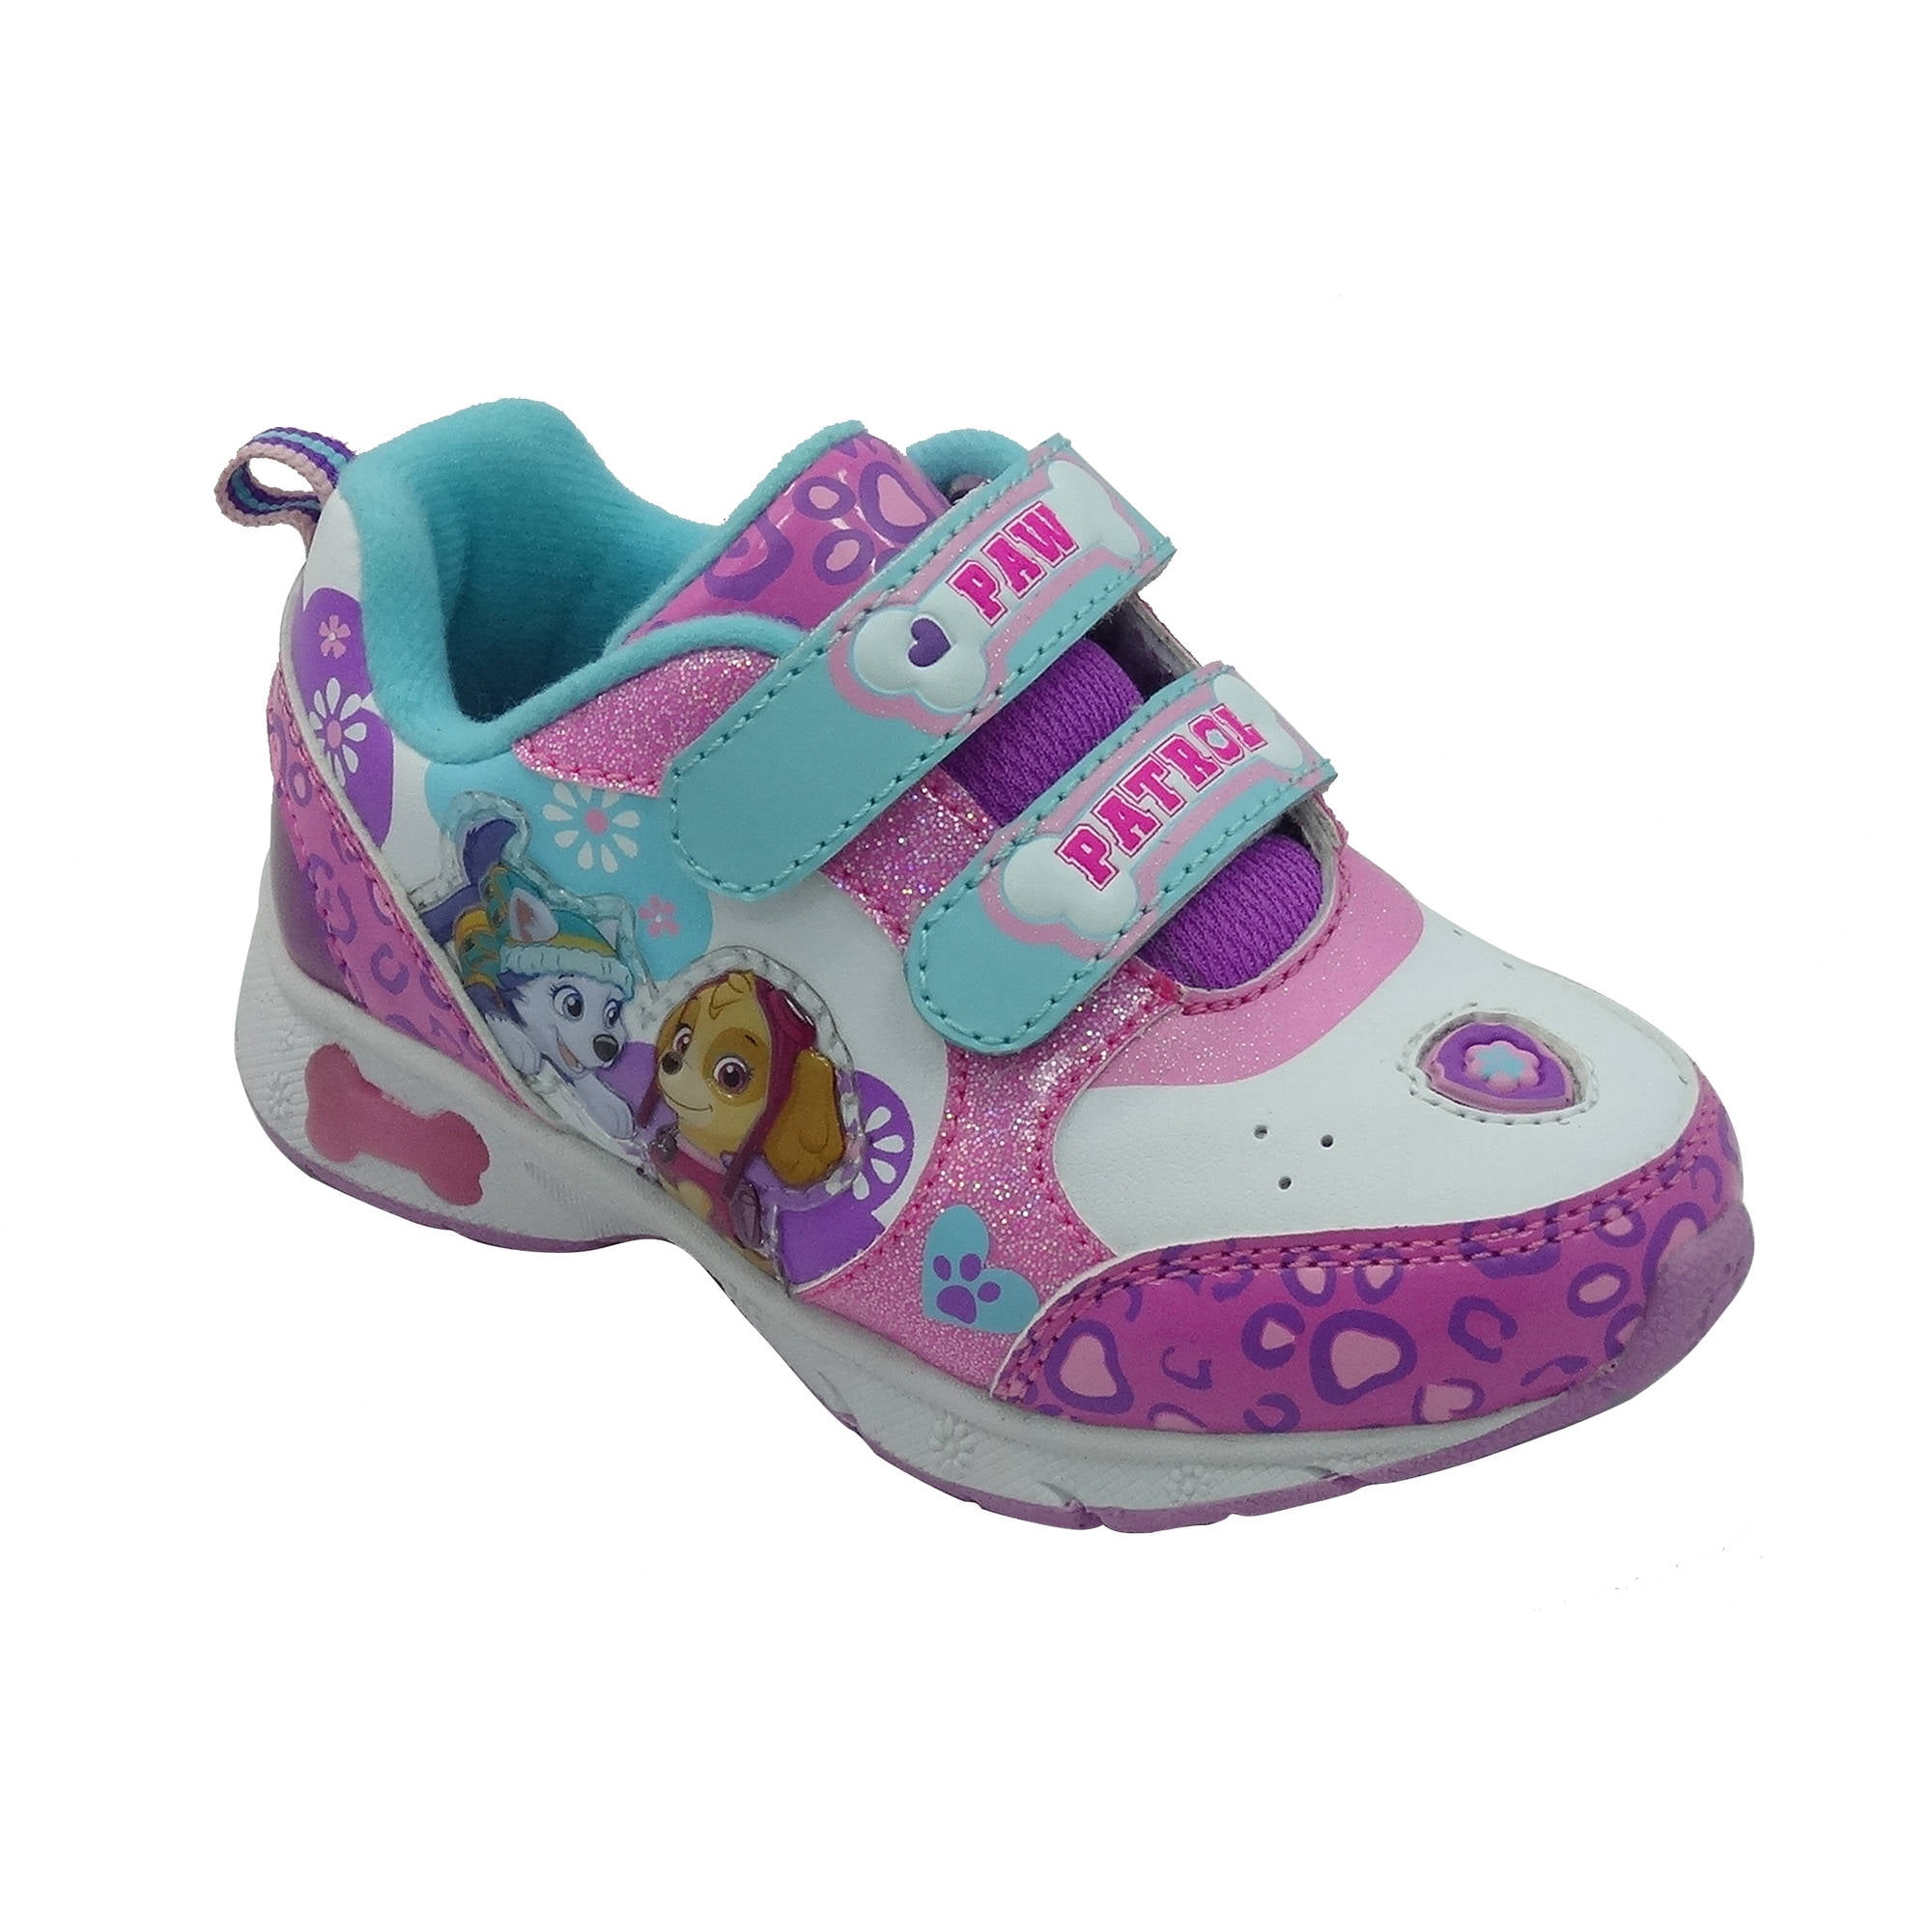 Kids' Roller Shoes - Walmart.com